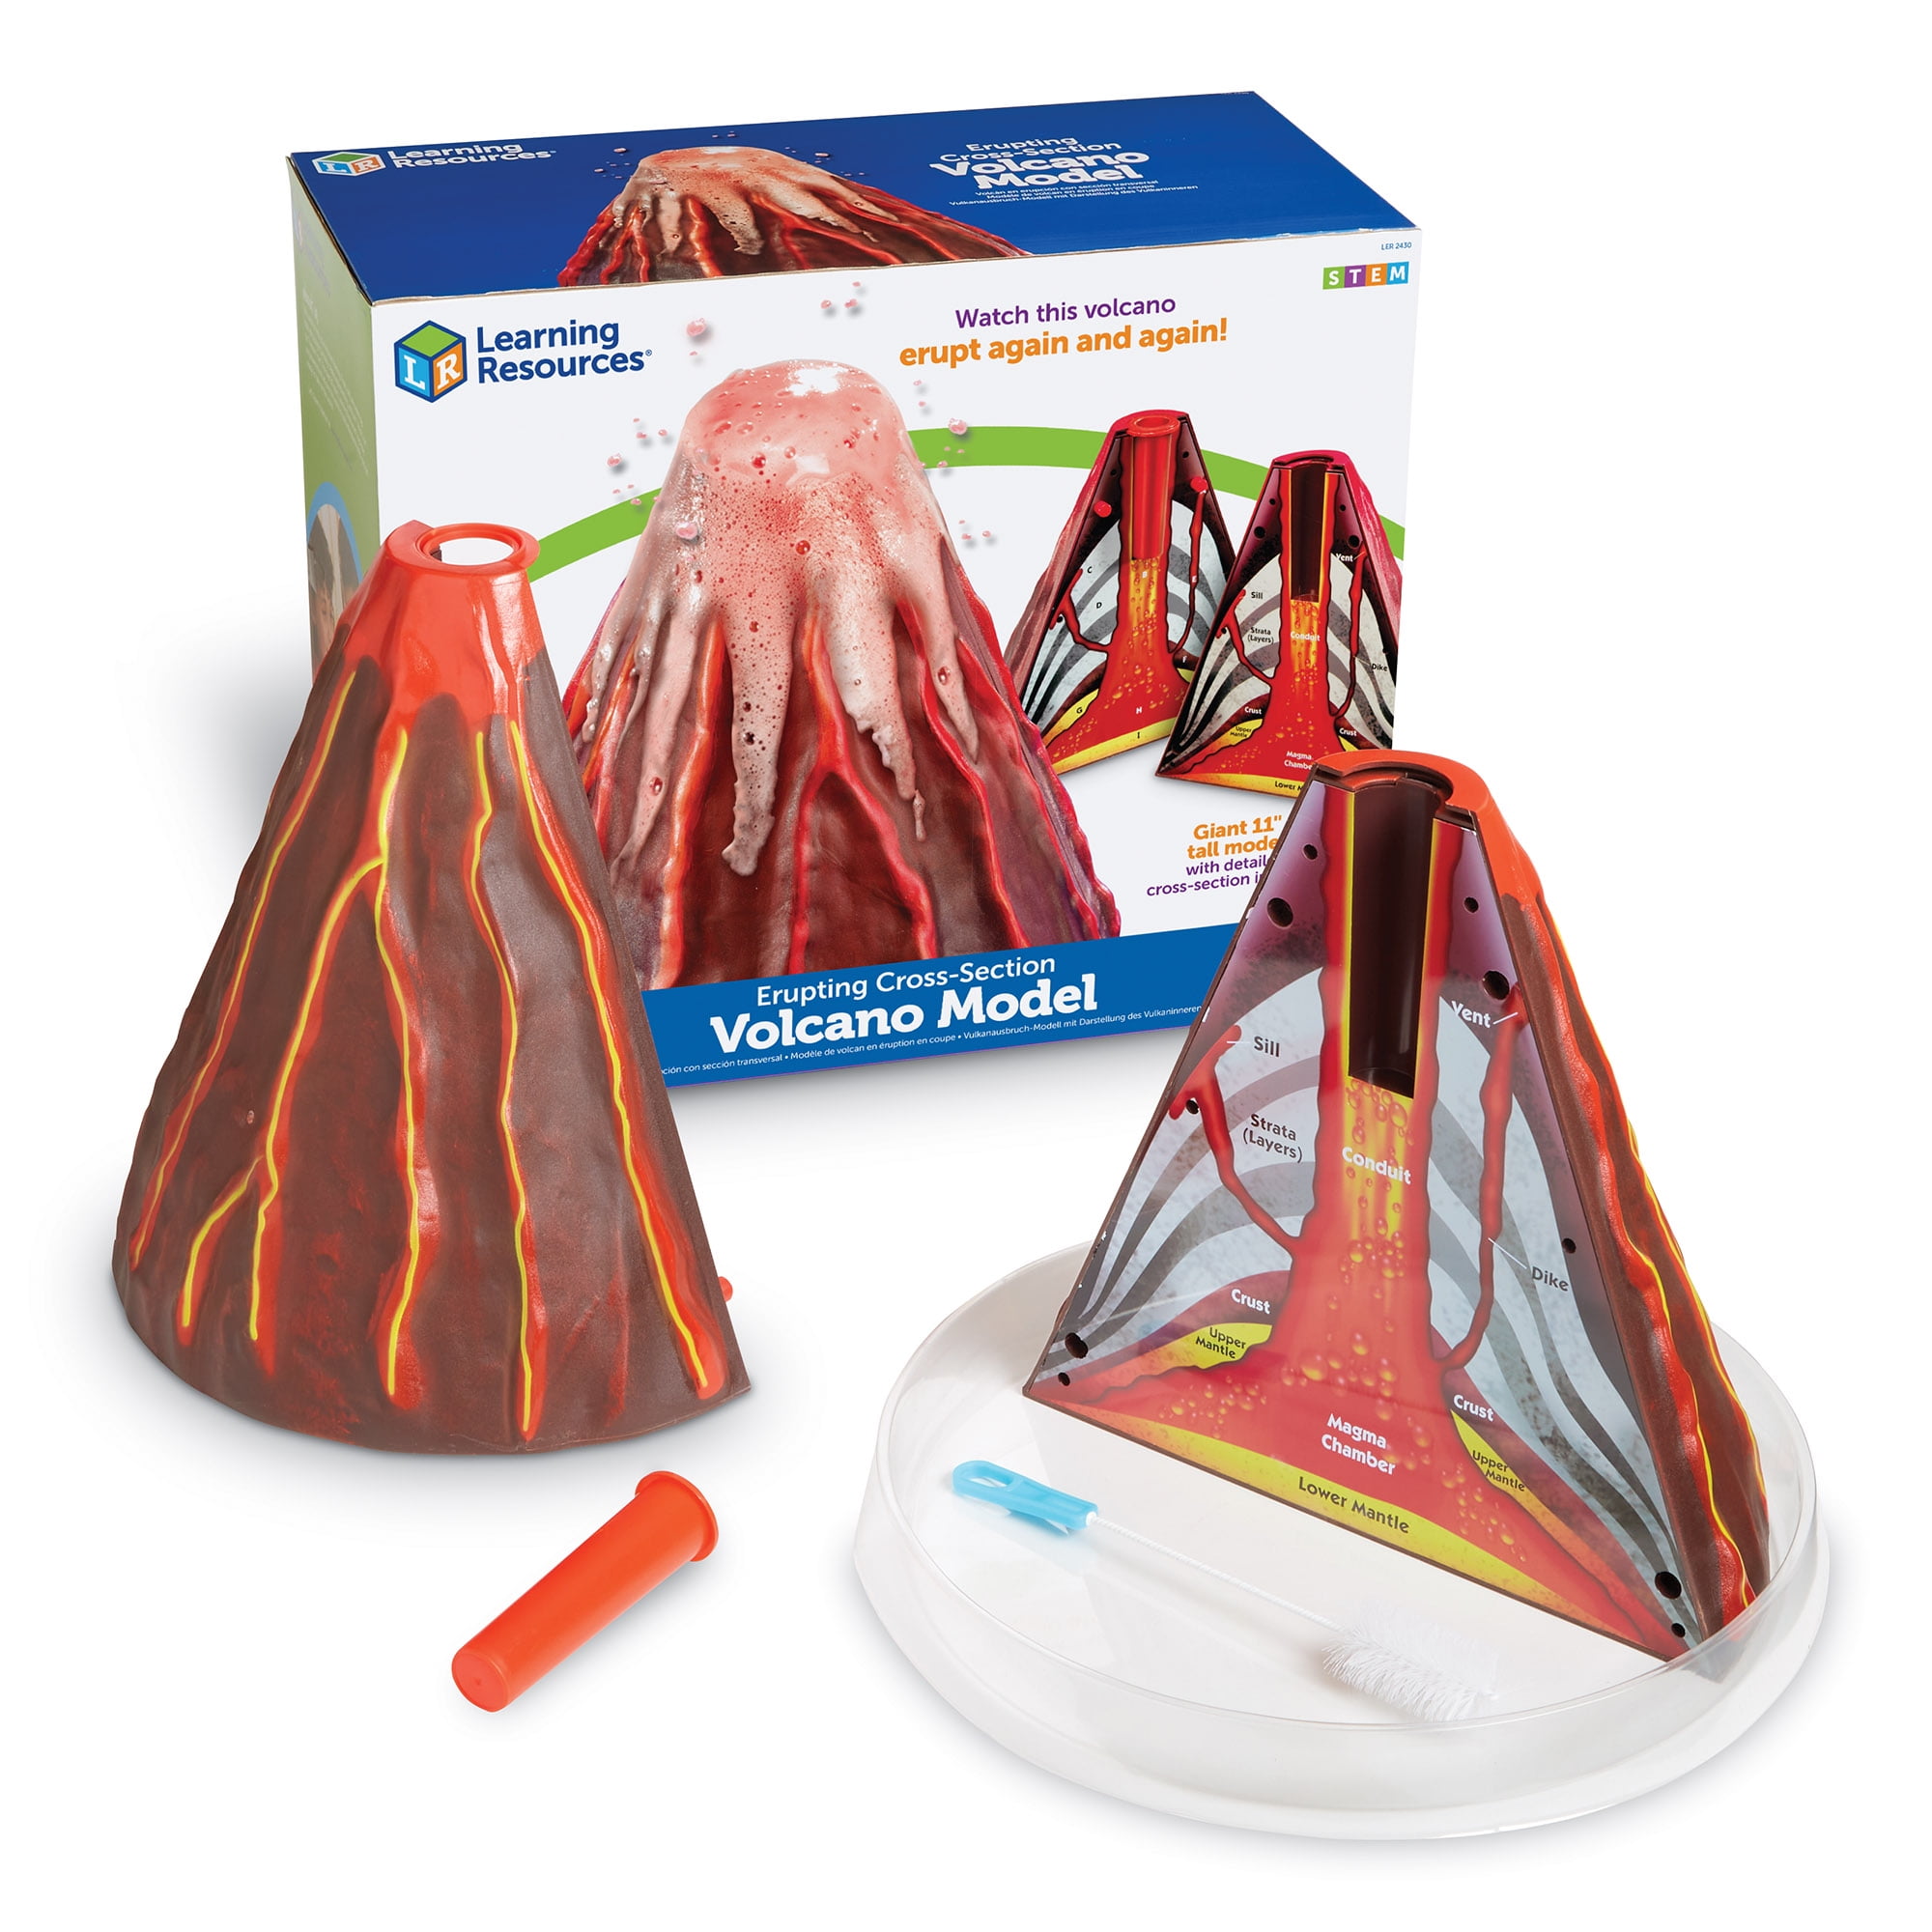 New Volcano Kit Display Box Experiment Kit Gift Toys Science Eruption School Fun 